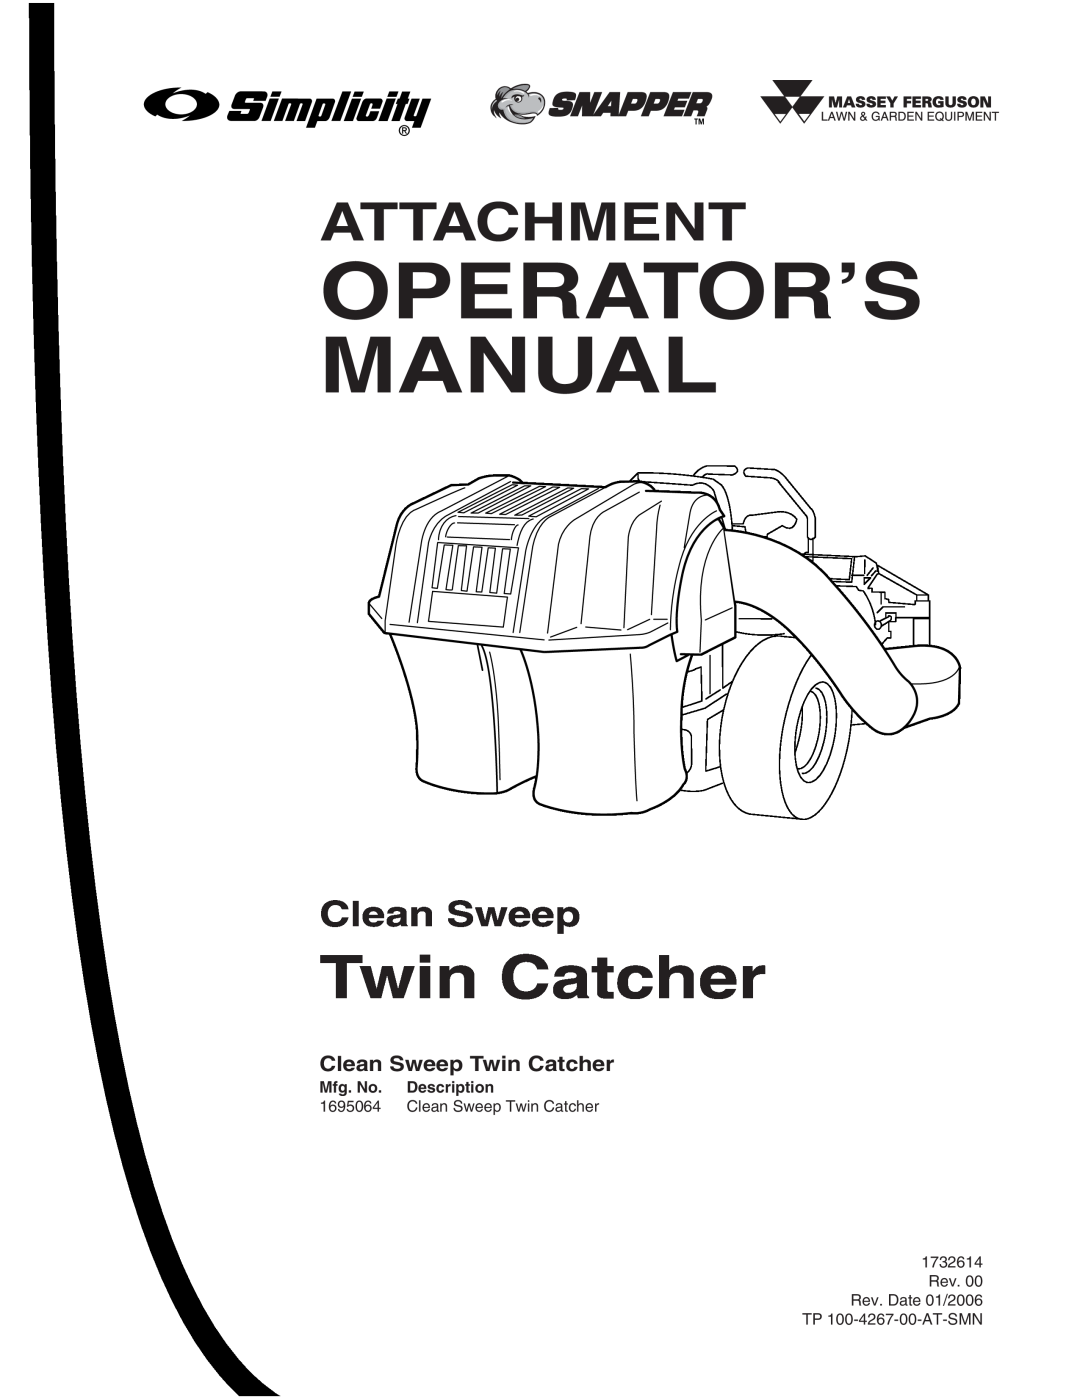 Snapper 1695064 manual Clean Sweep Twin Catcher, Operator’S Manual, Attachment, Mfg. No. Description 